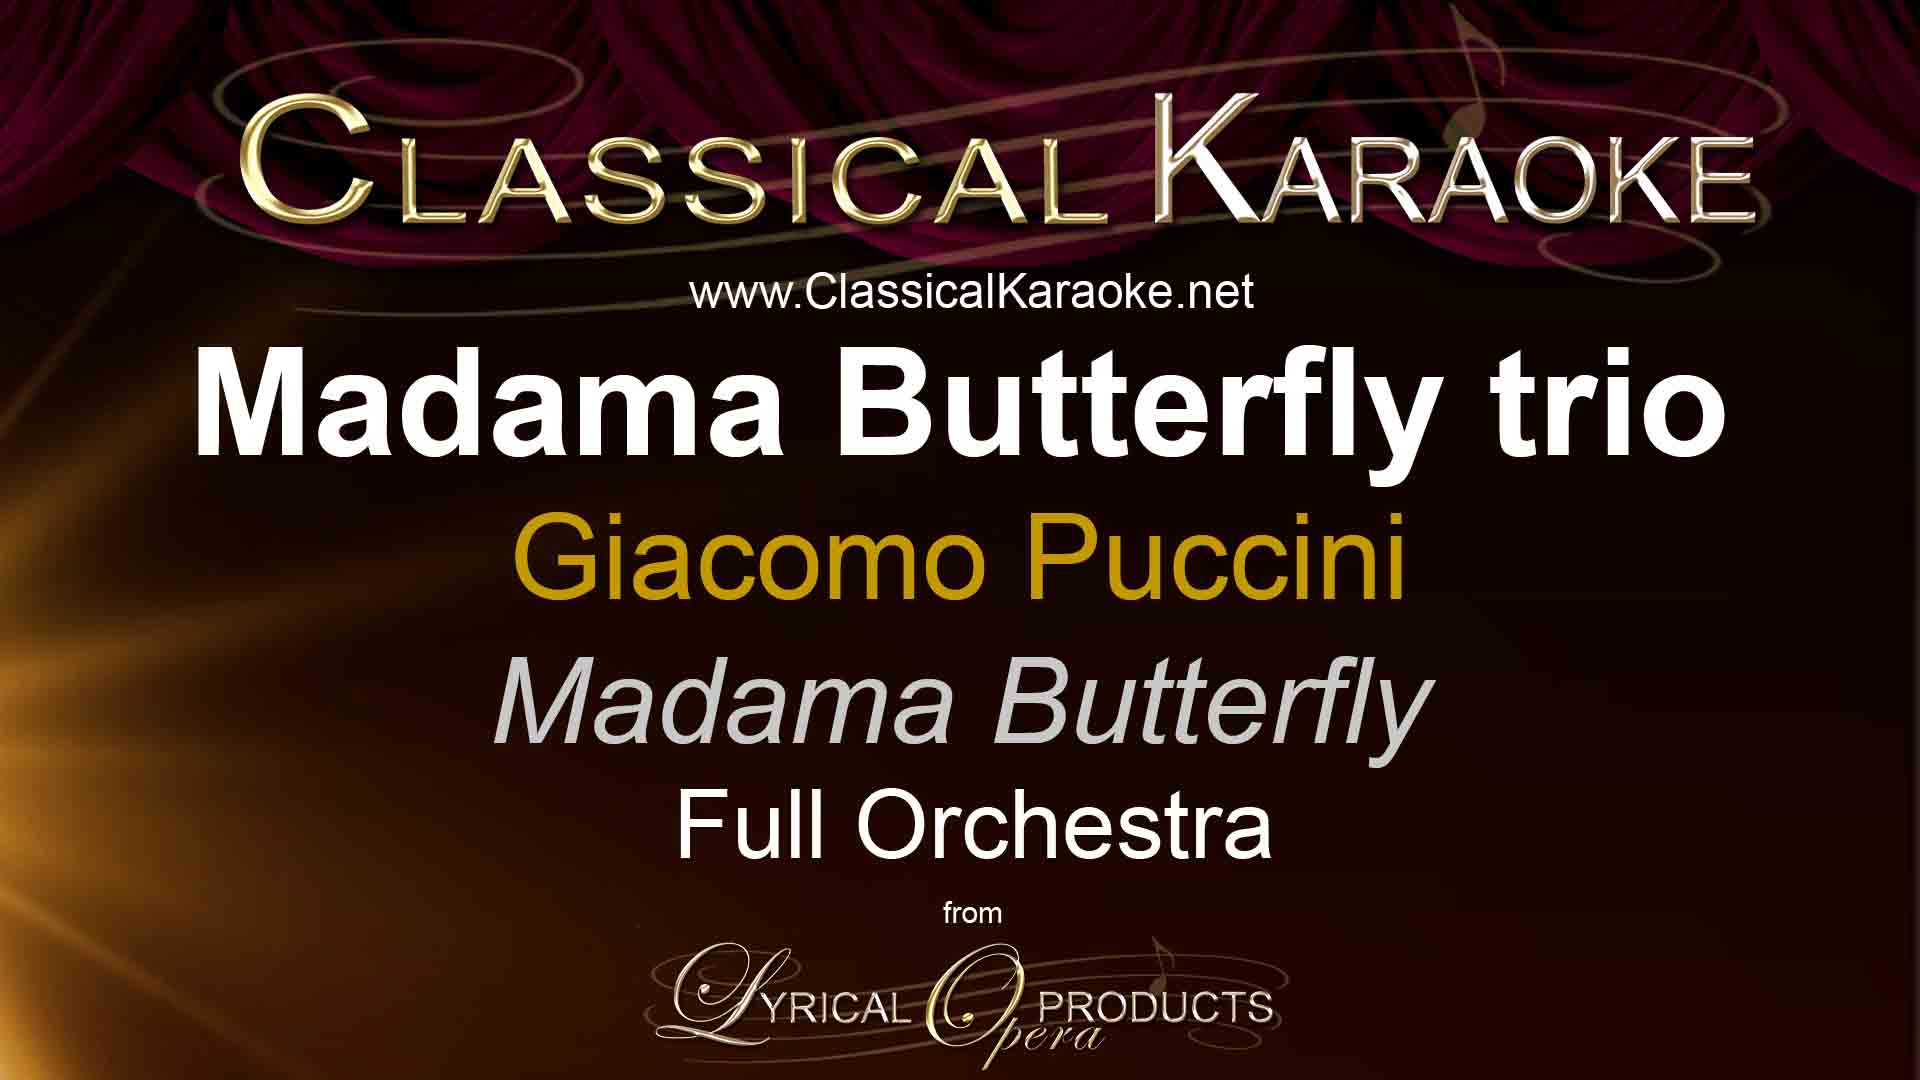 Madama Butterfly Trio (Lo so che alle sue pene), from Madama Butterfly, Full Orchestral Accompaniment (karaoke) track